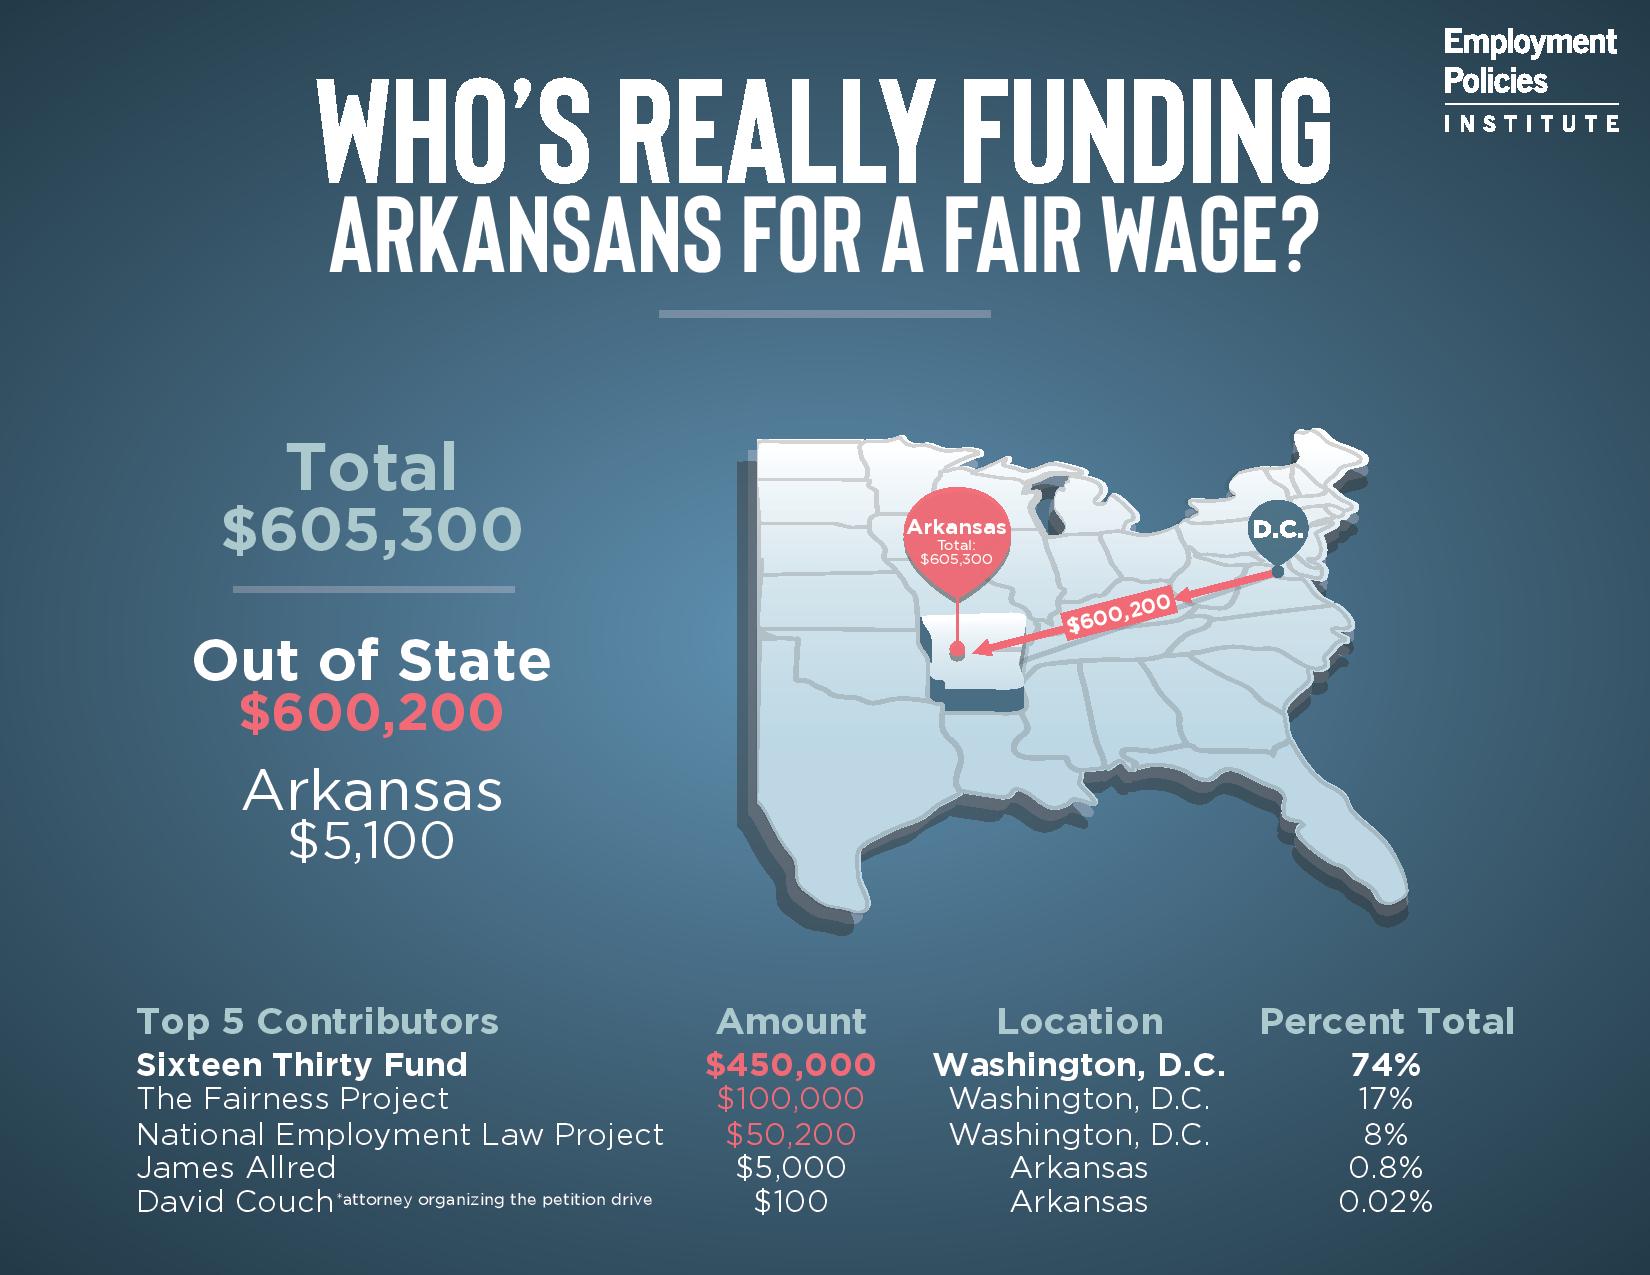 99 of "Arkansans for a Fair Wage" funding from outside Arkansas